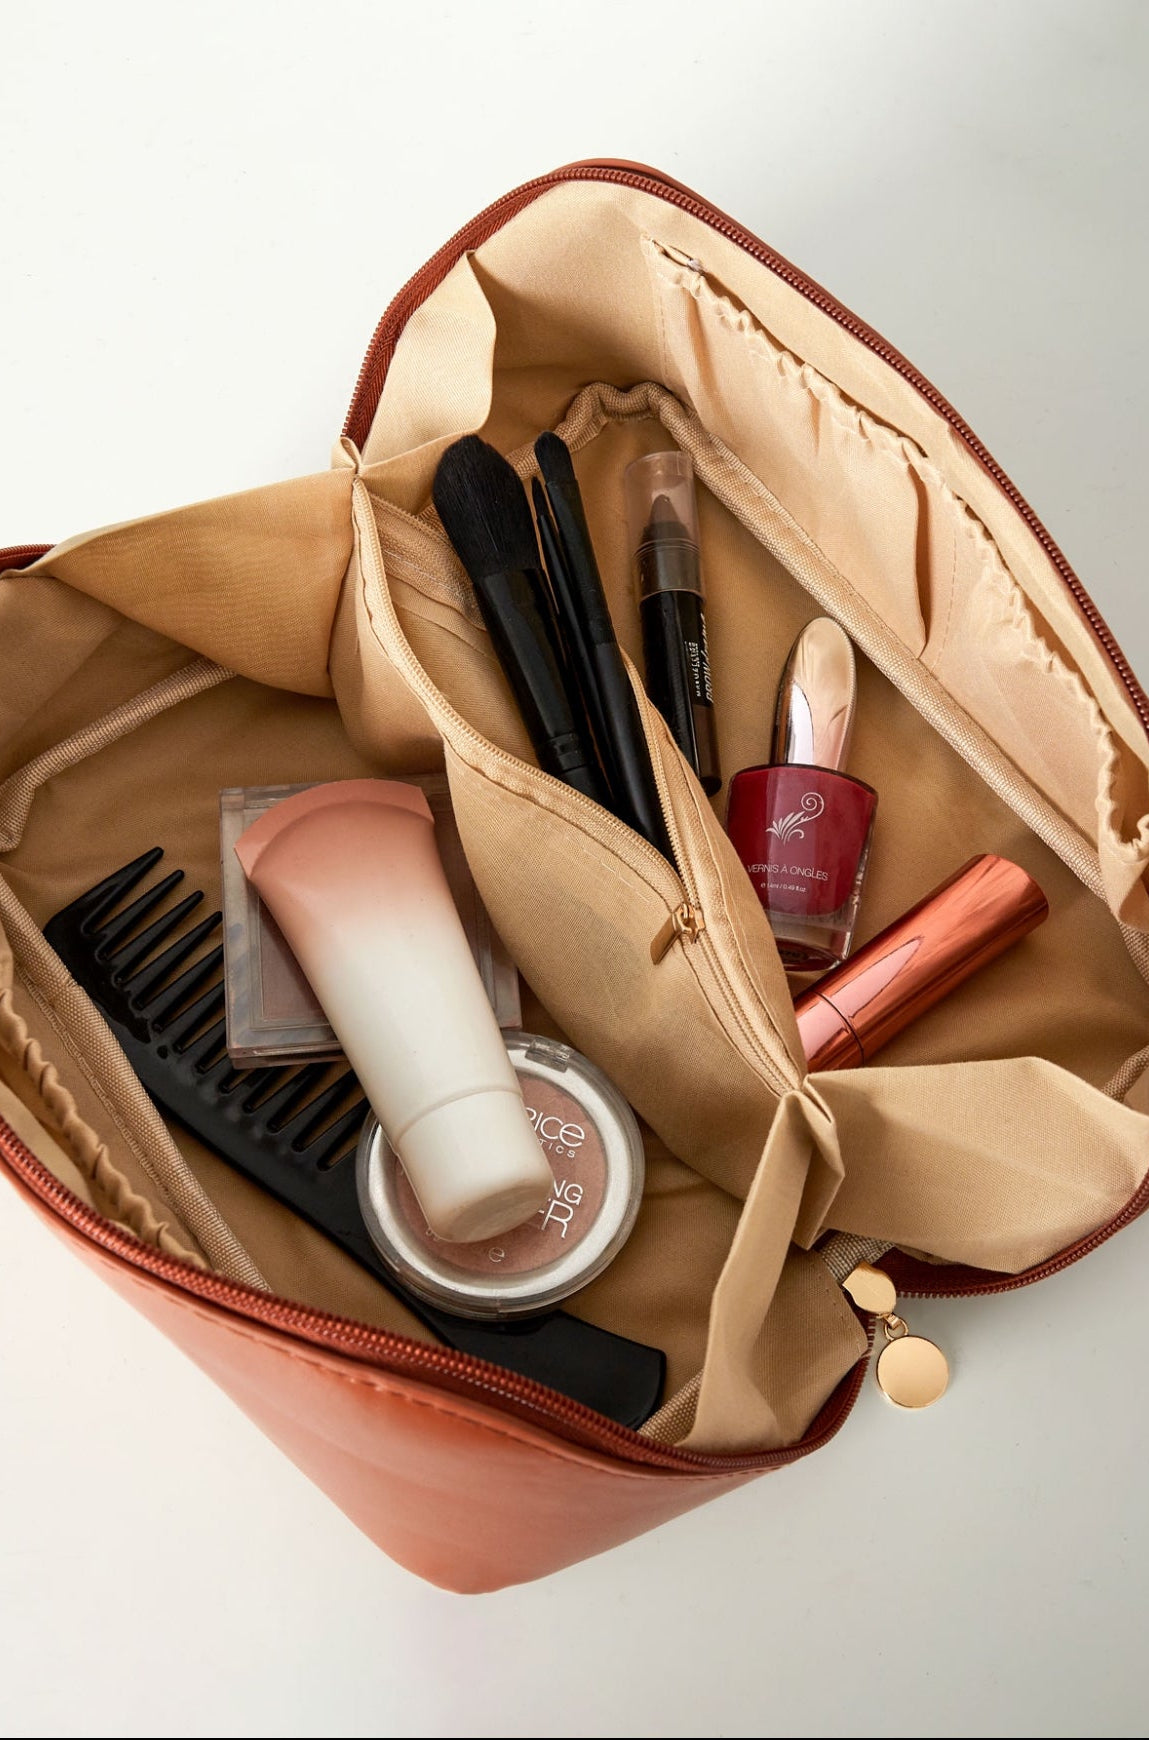 Make up bag -